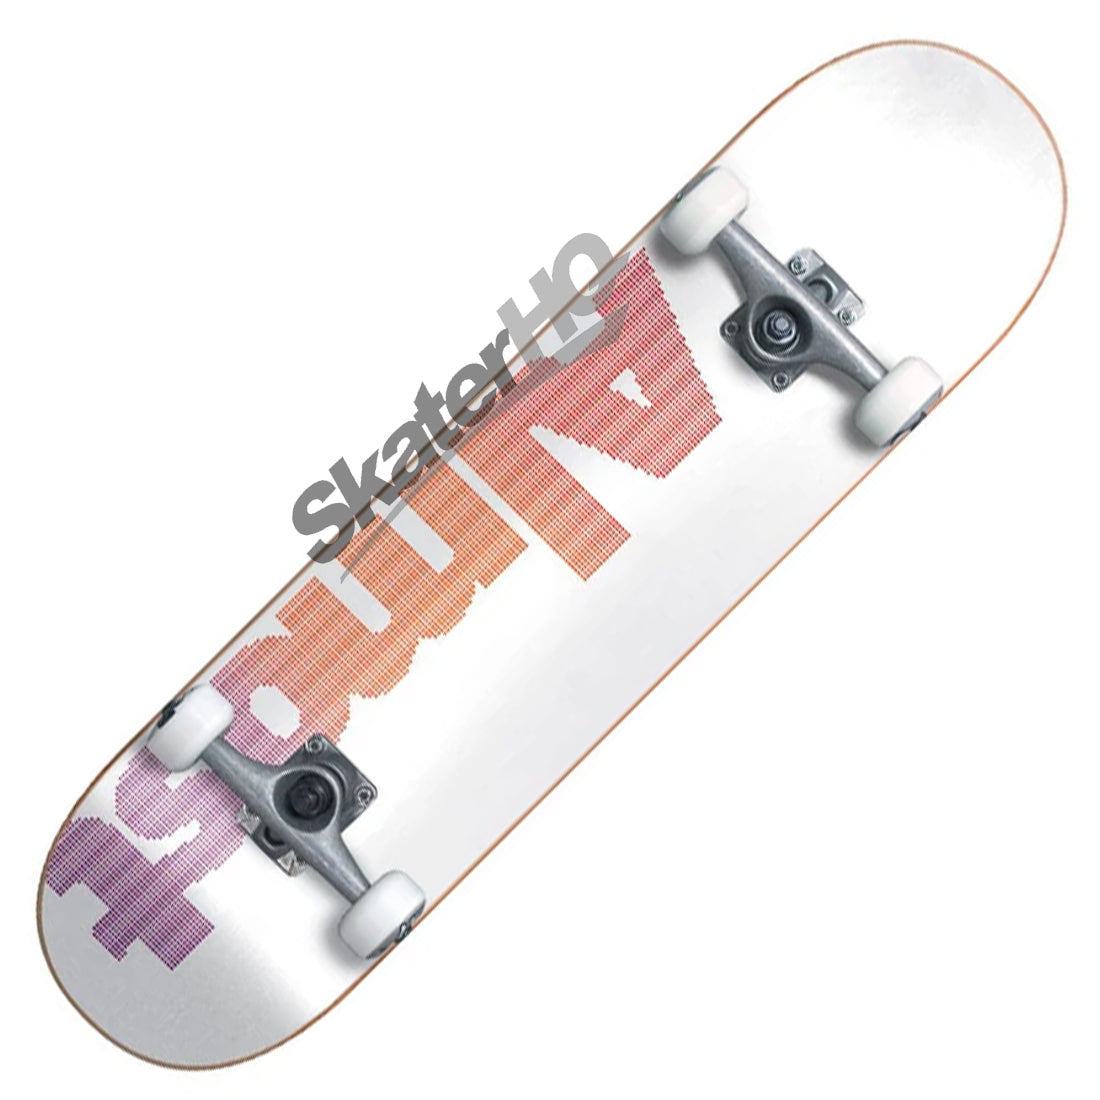 Almost Dot Logo 7.75 Complete - White Skateboard Completes Modern Street